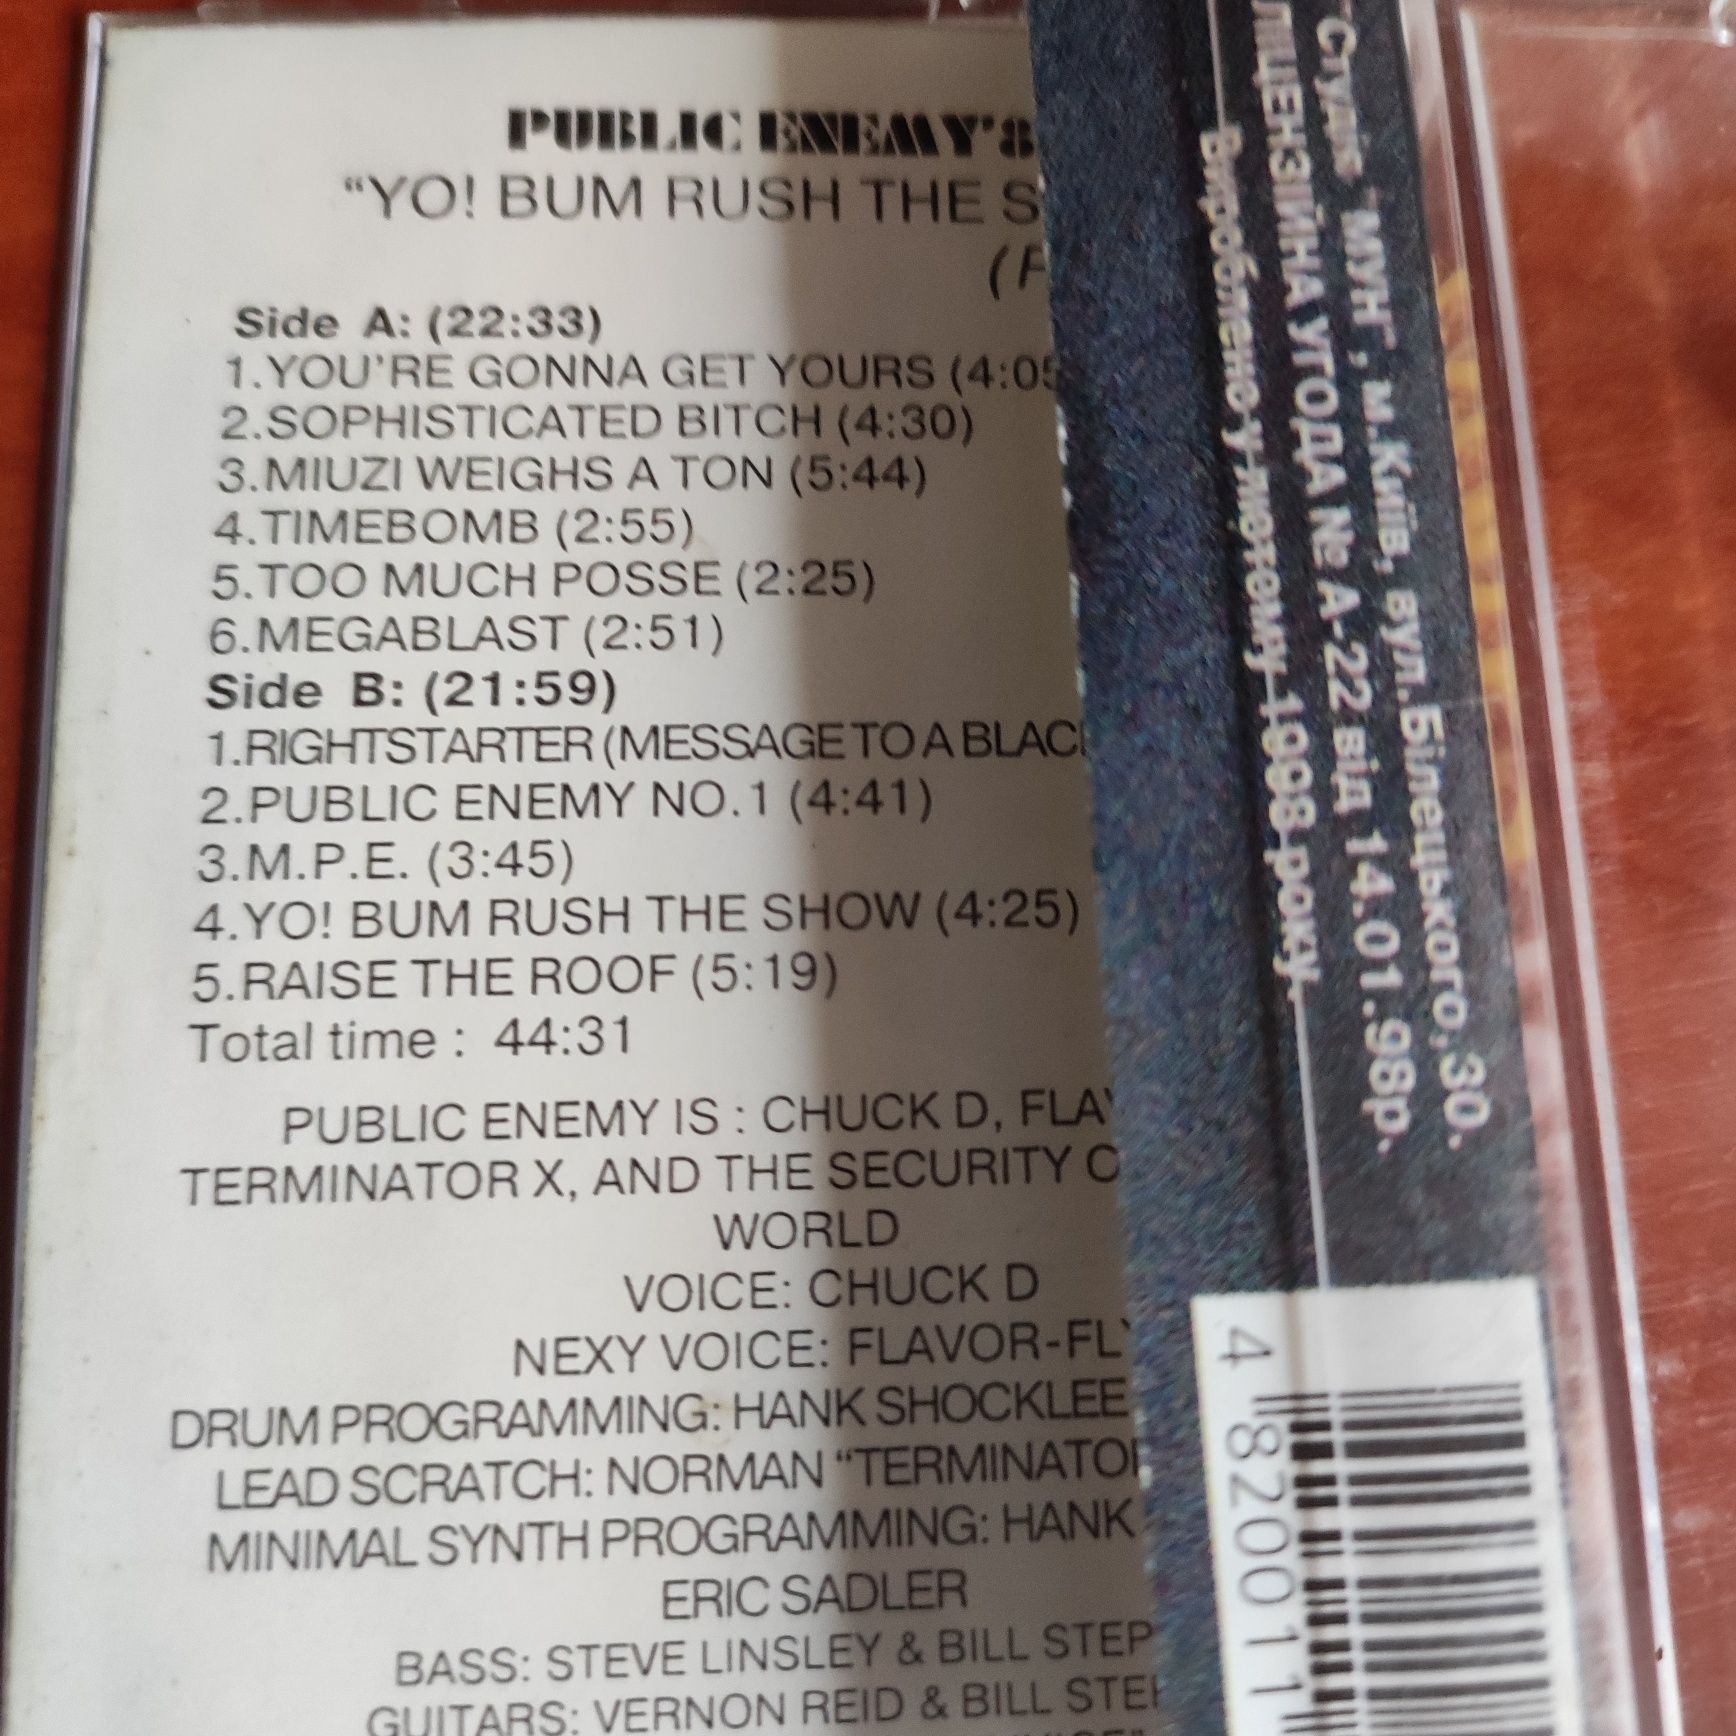 Public Enemy аудиокассеты.